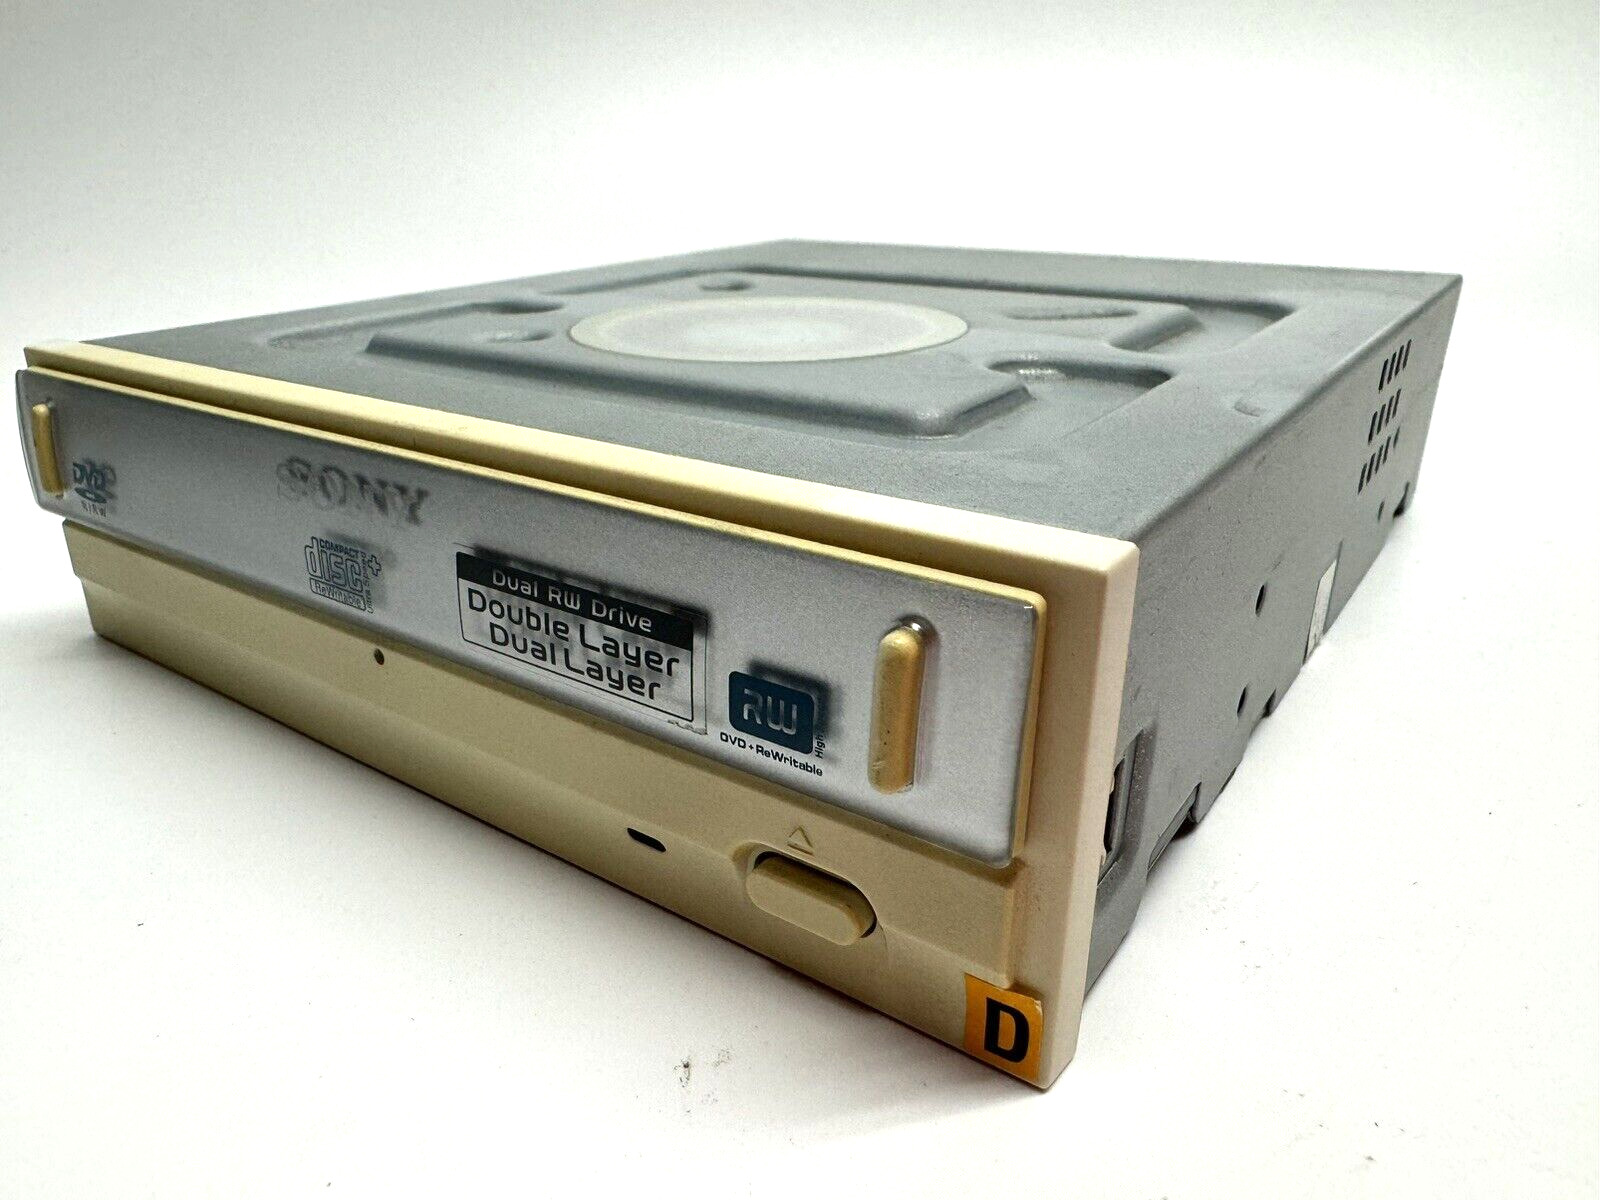 VINTAGE NEW SONY DRU-810A-R DVD/CD DUAL LAYER REWRITABLE DRIVE 8.5GB